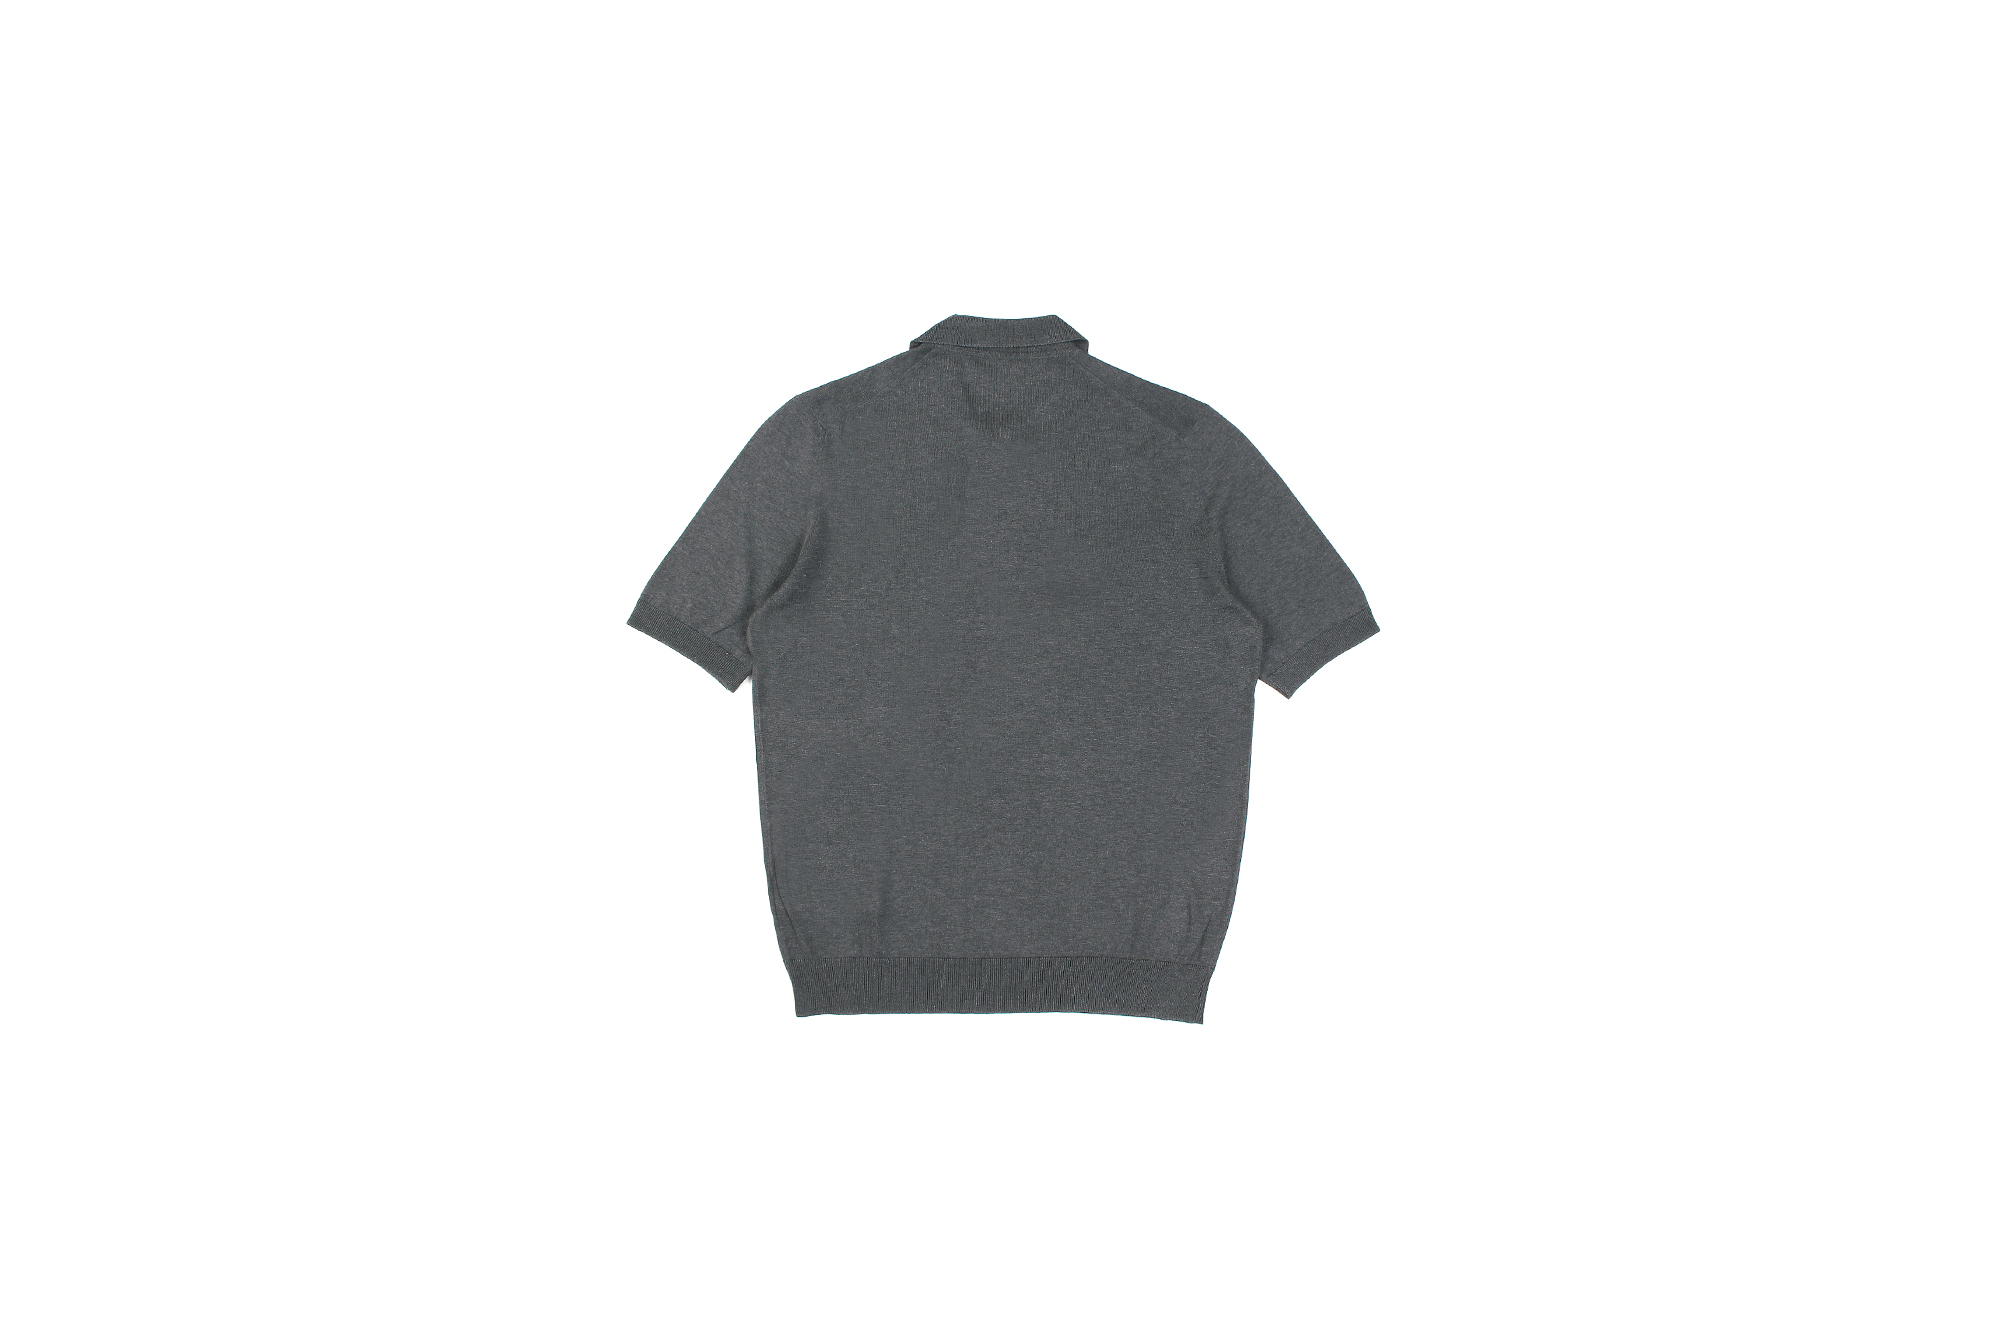 Gran Sasso (グランサッソ) Silk Knit Polo Shirt (シルクニットポロシャツ) SETA (シルク 100%) シルク ニット ポロシャツ GREY (グレー・097) made in italy (イタリア製) 2020 春夏新作 愛知 名古屋 altoediritto アルトエデリット 